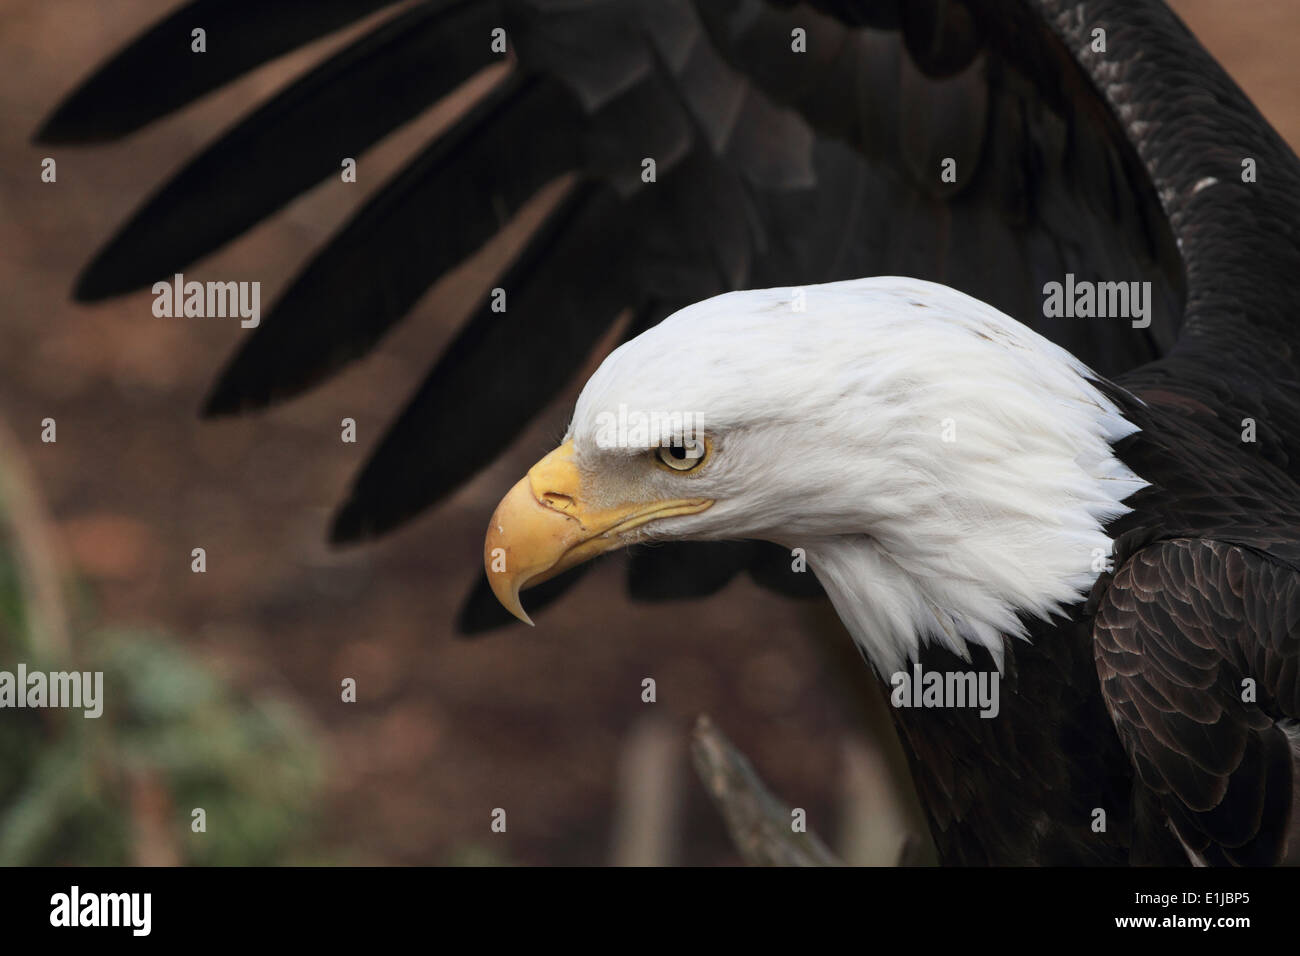 A Bald Eagle, Haliaeetus leucocephalus, with wing spread. Bergen County Zoo, Van Saun Park, Paramus, New Jersey, USA Stock Photo